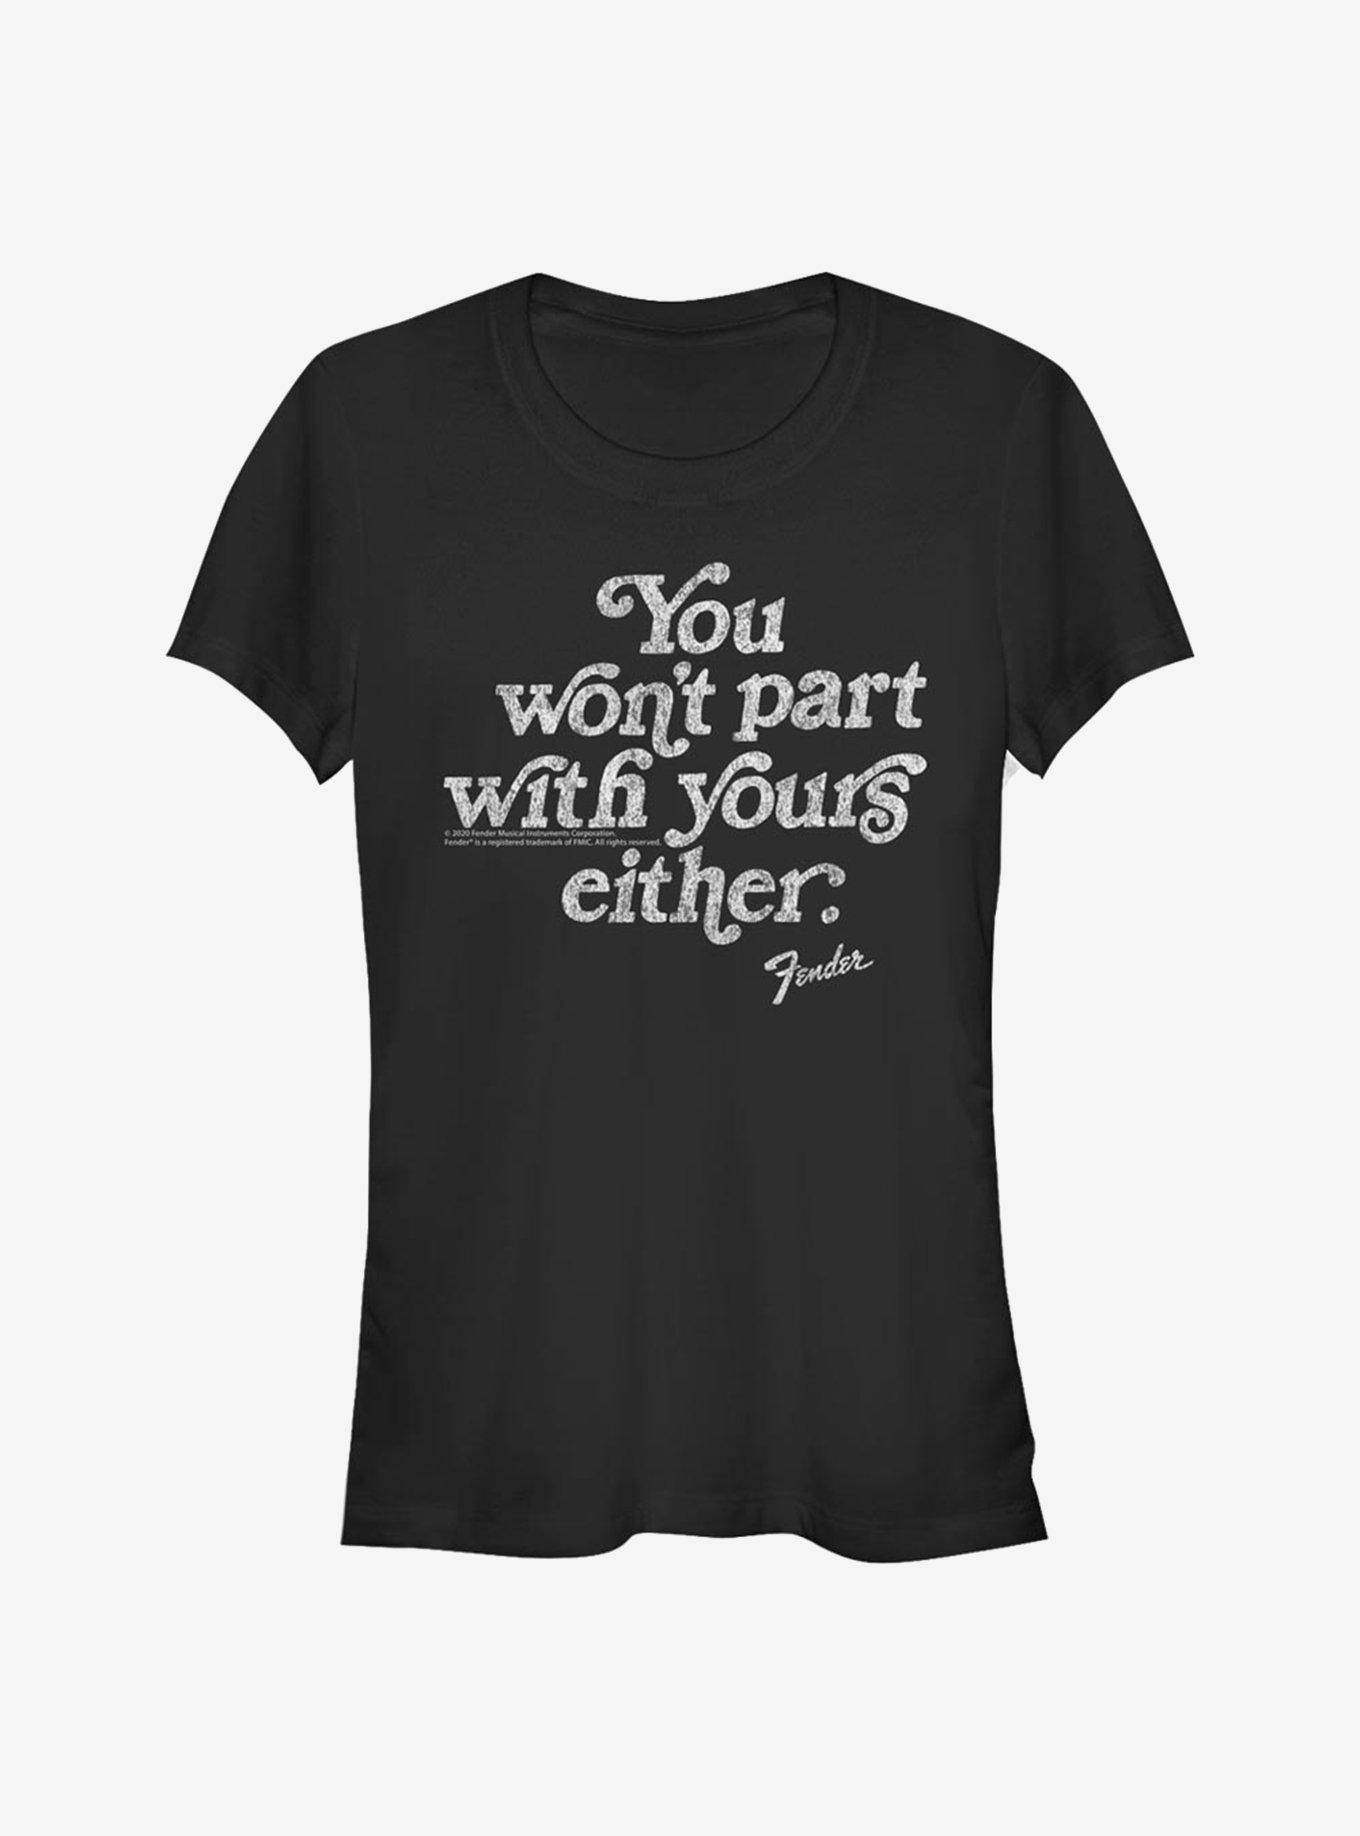 Fender Vintage Quote Girls T-Shirt